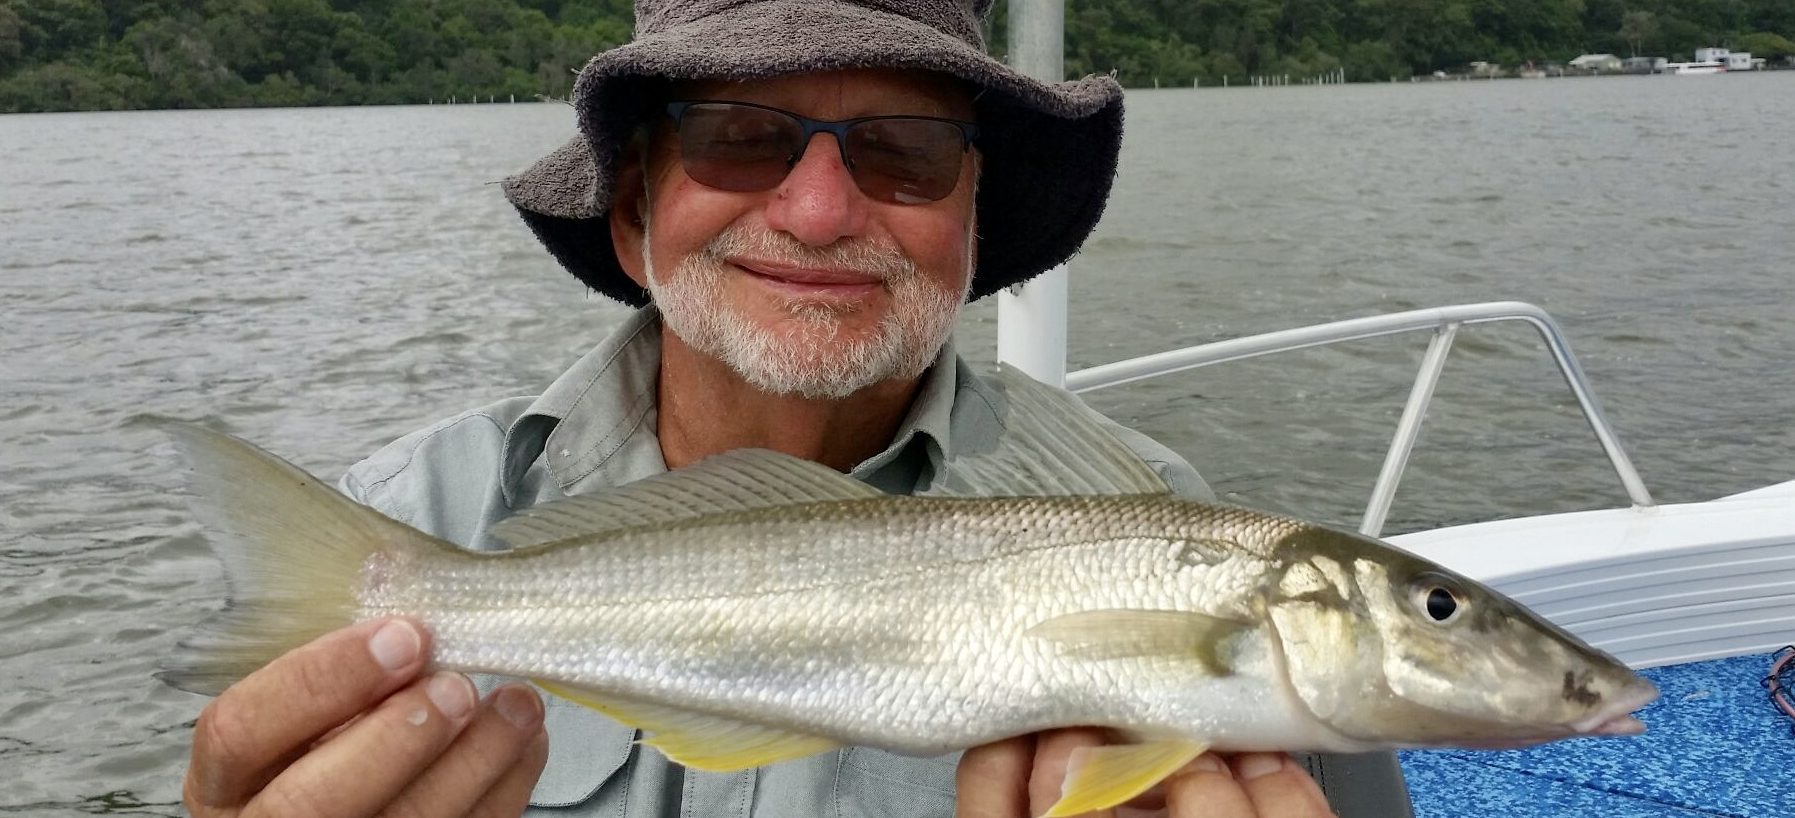 “CLARKIES” GOLD COAST FISHING REPORT